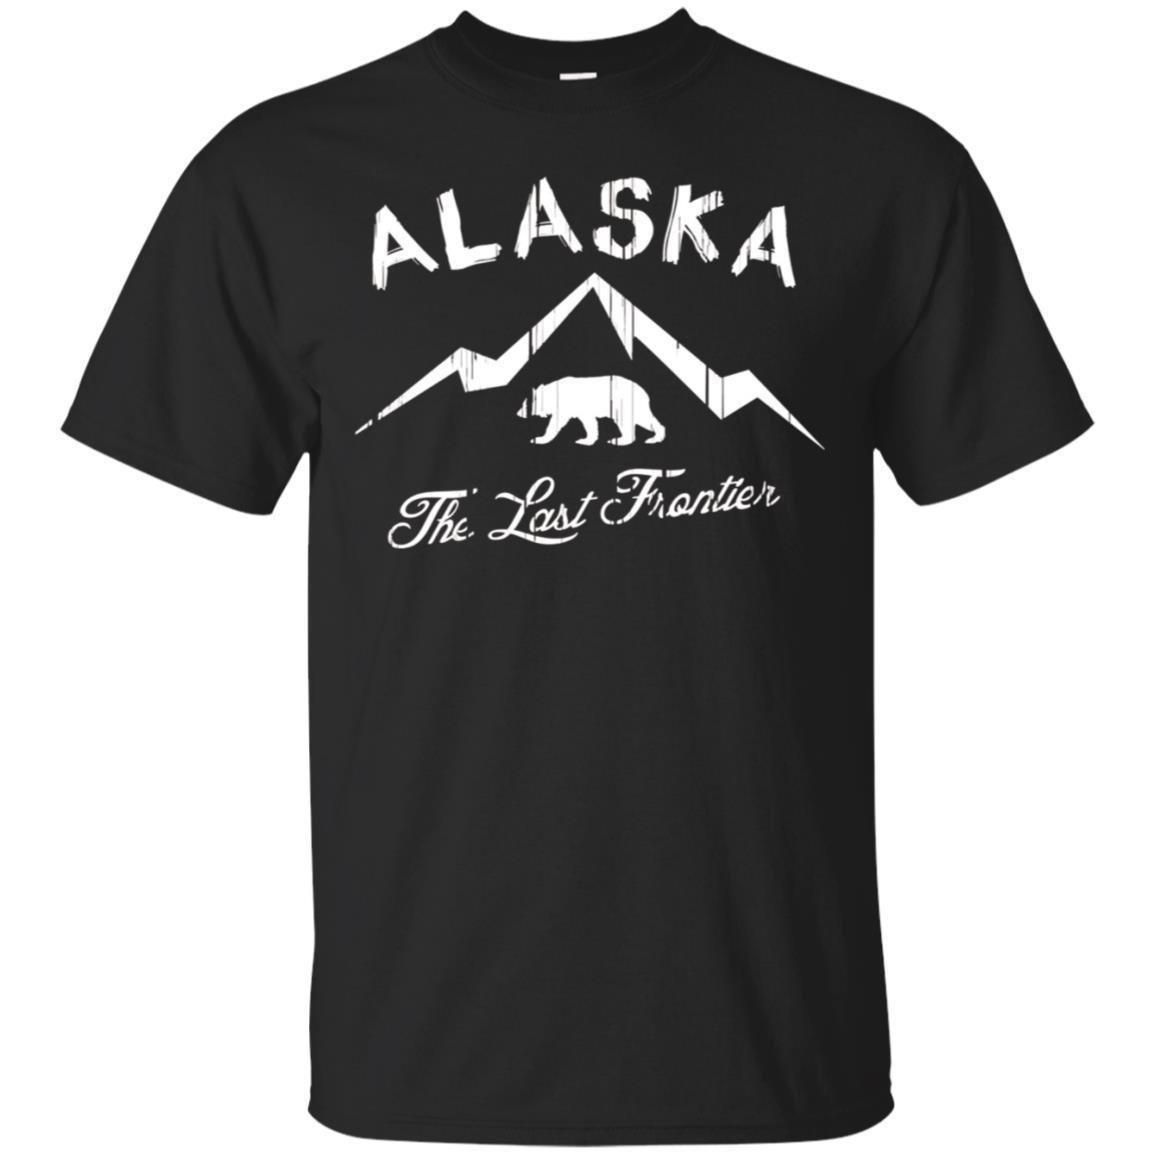 Order Alaska State T-shirt The Last Frontier Alaska Home Shirt